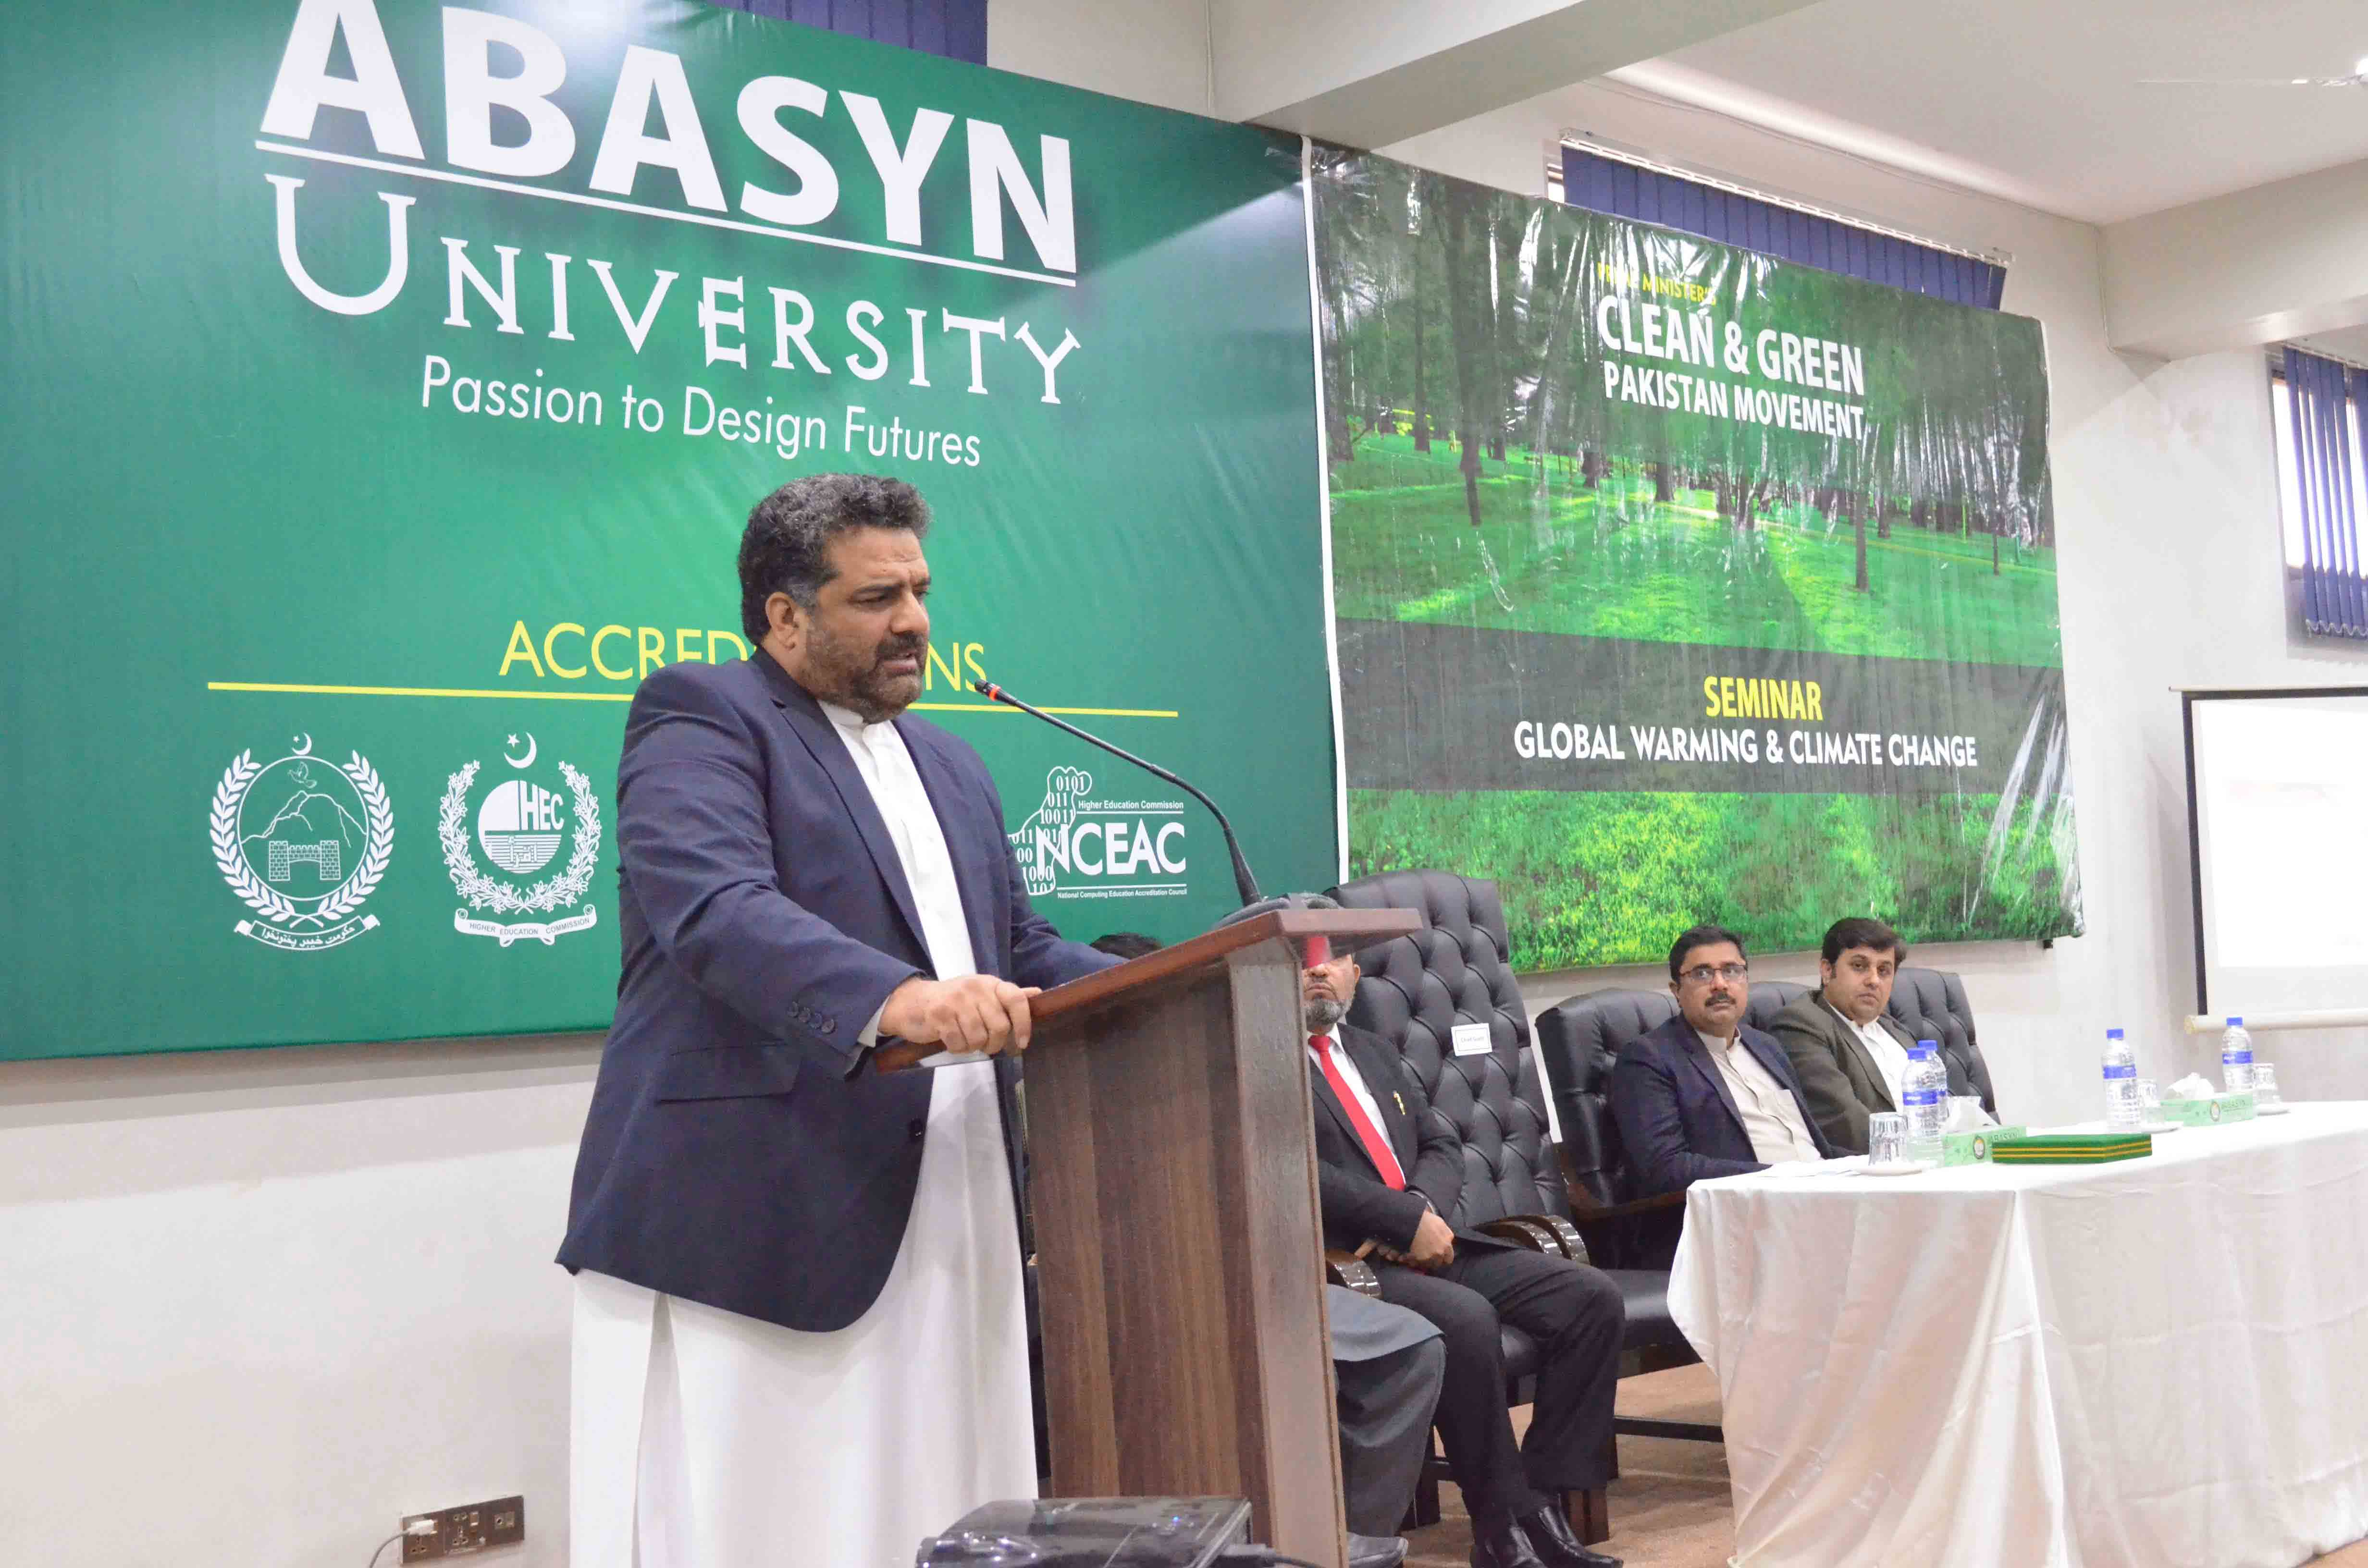 Green Pakistan Movement 2018